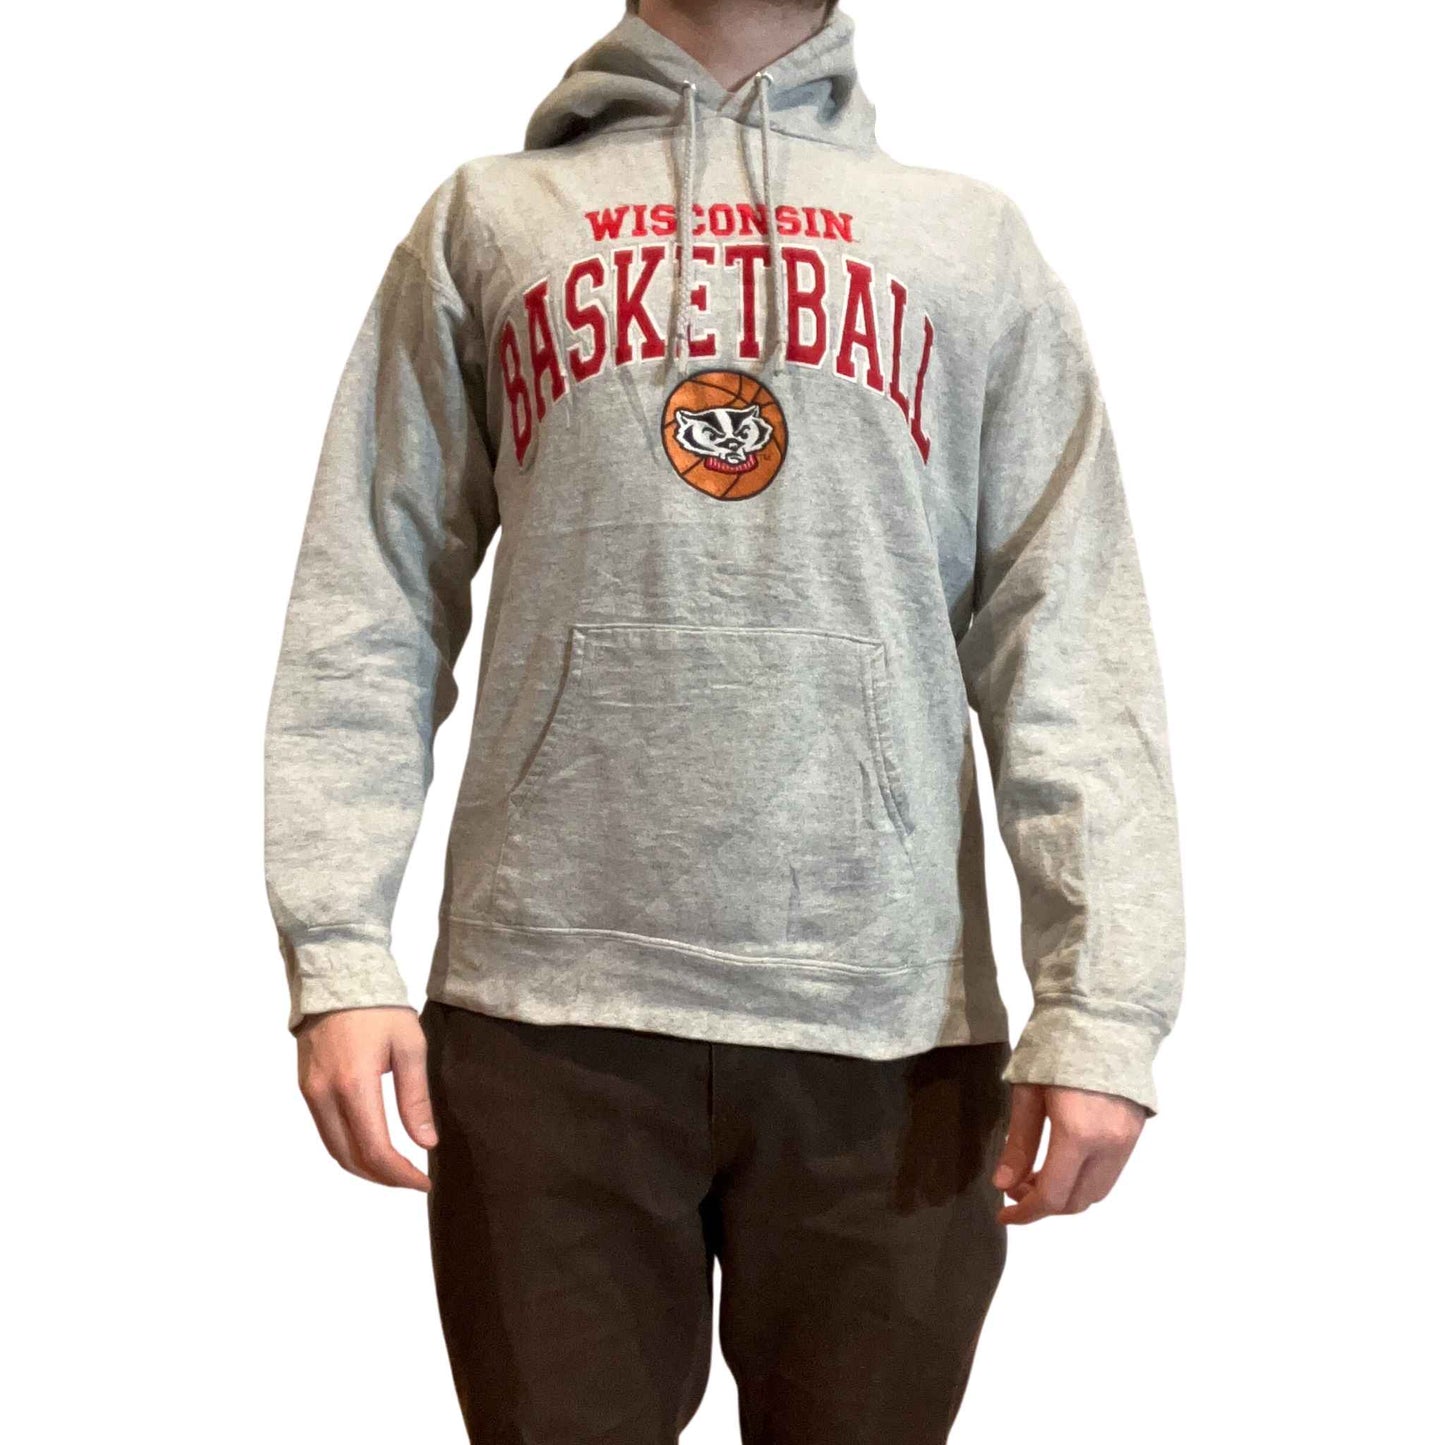 Wisconsin Basketball: American College Sweatshirt | Size S